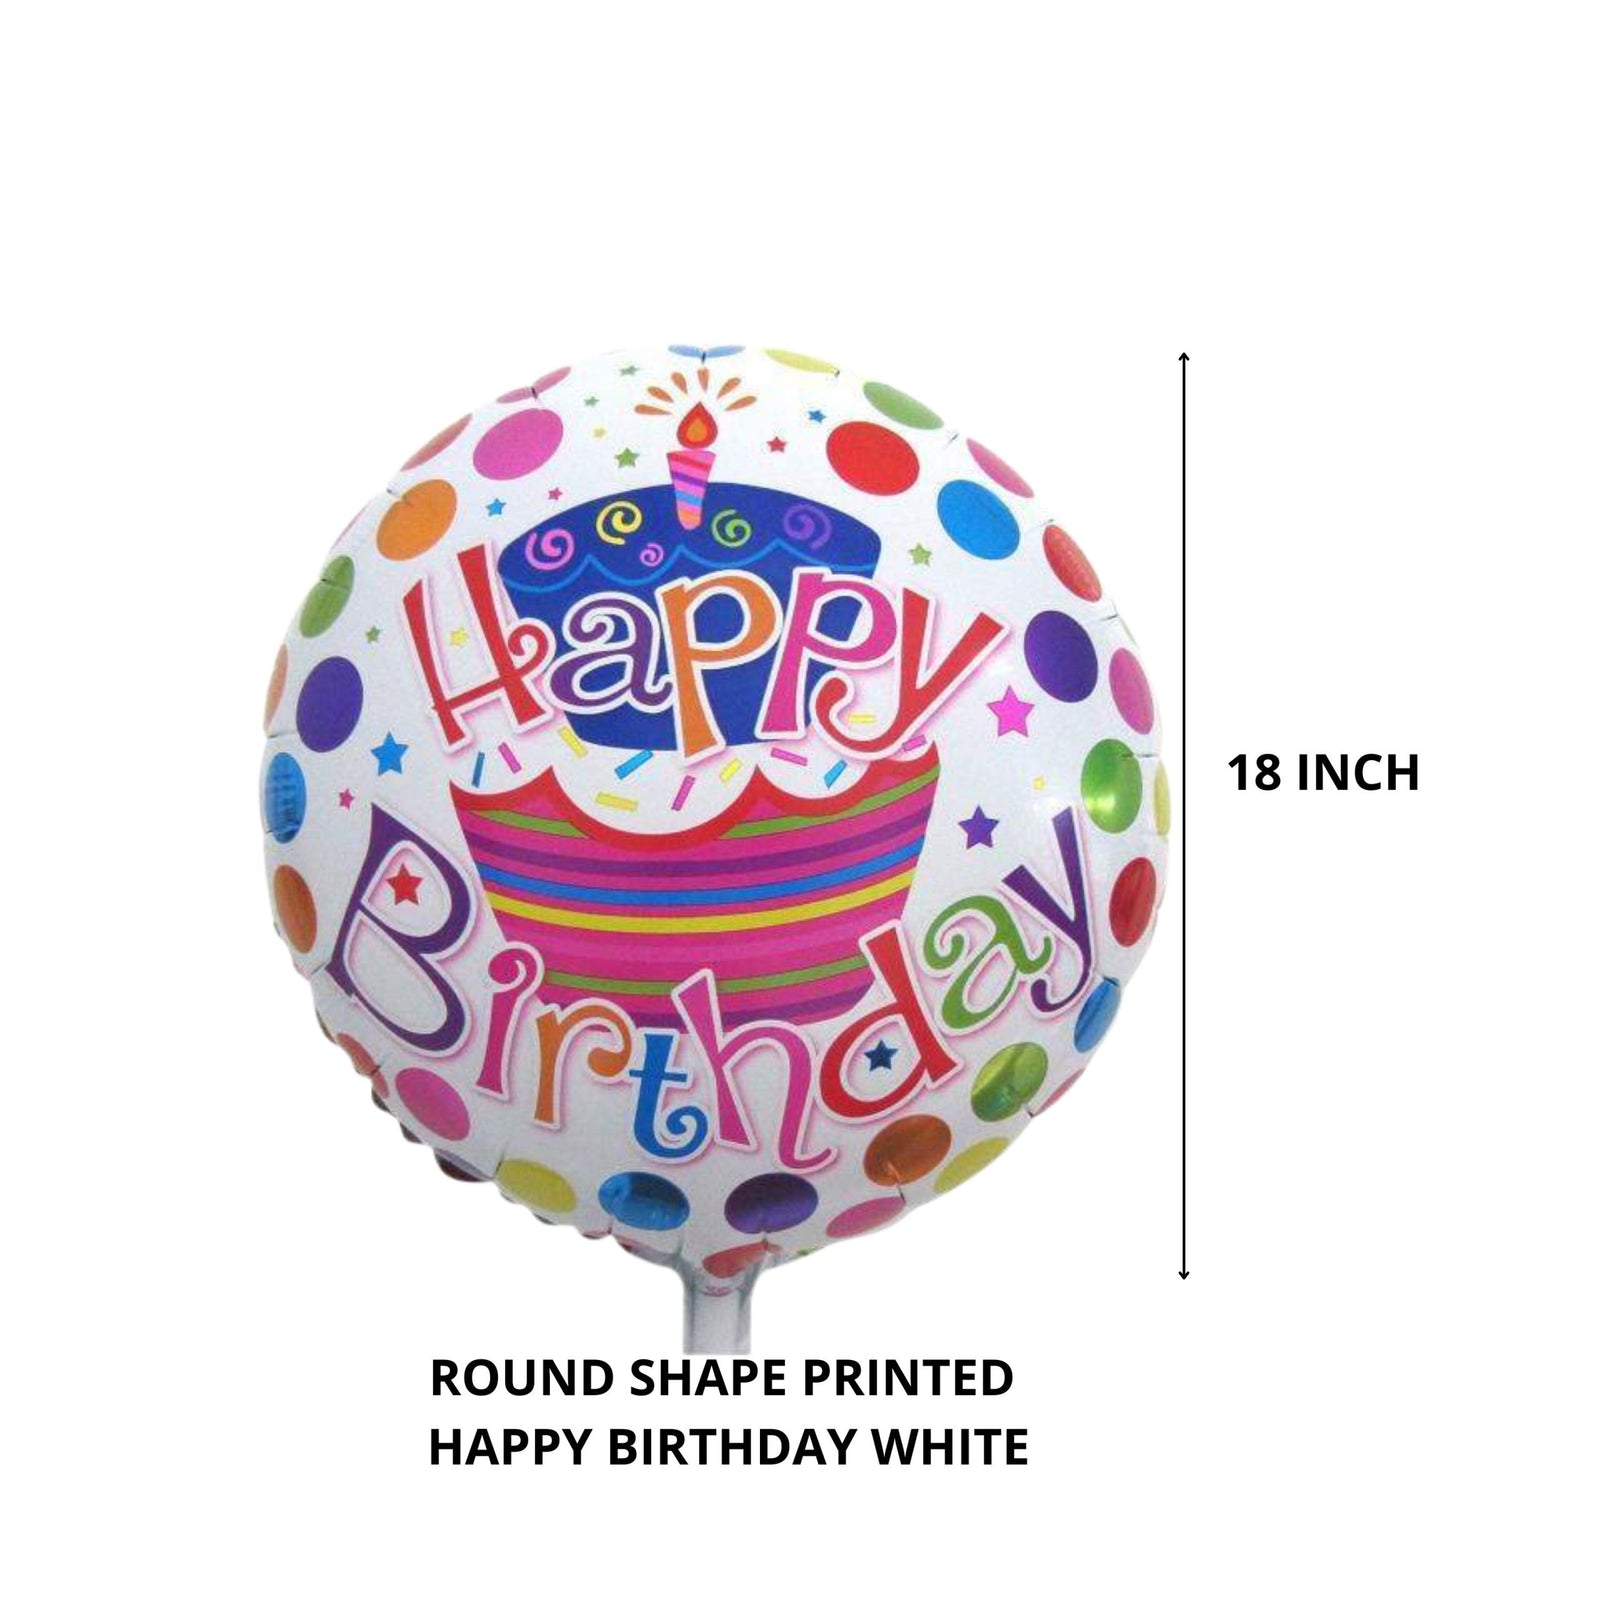 Printed Round Shape Cake Happy Birthday Foil Balloon